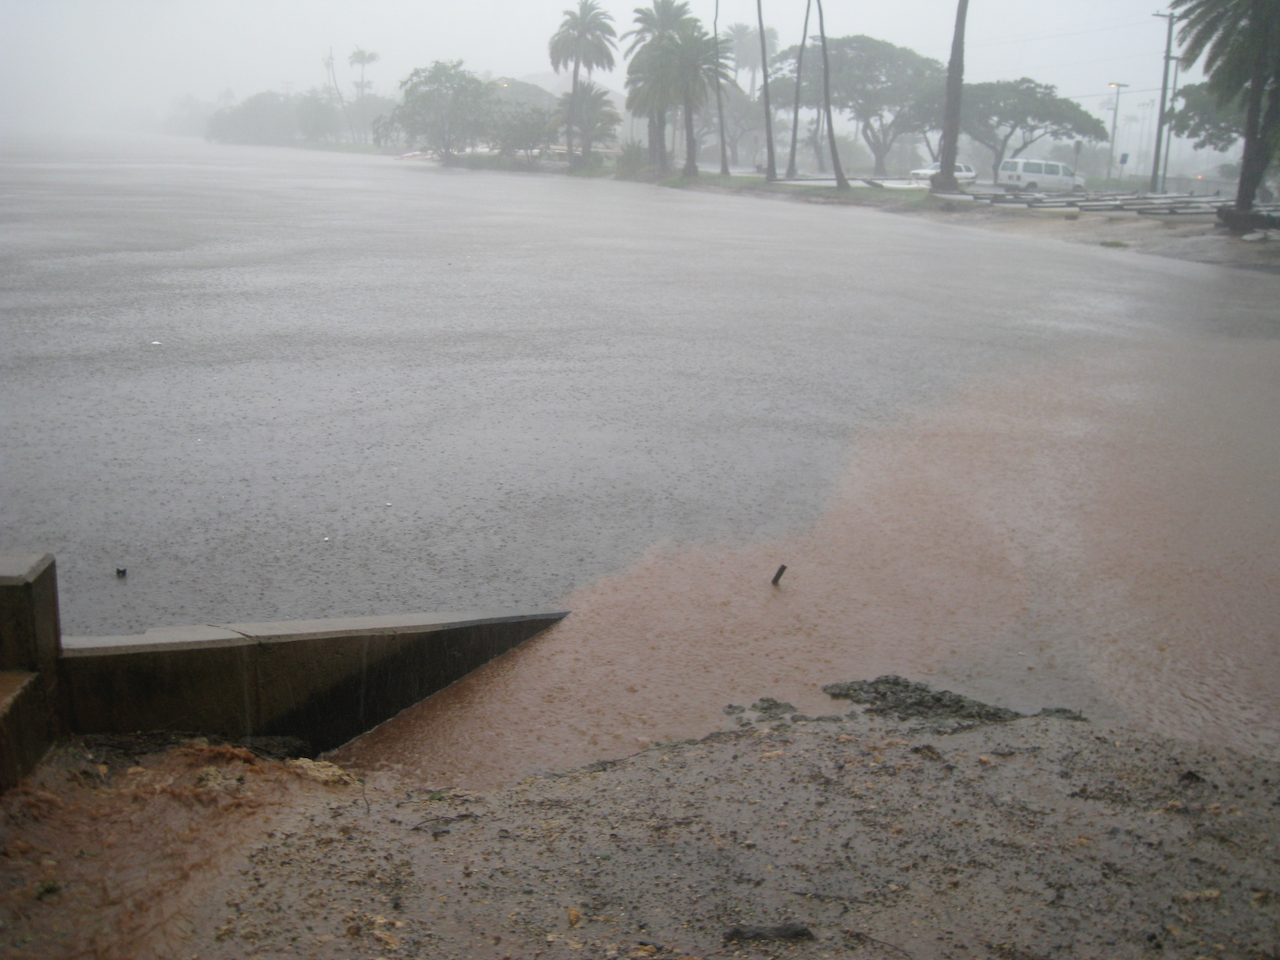 Ala Wai Canal and Harbor during heavy rain